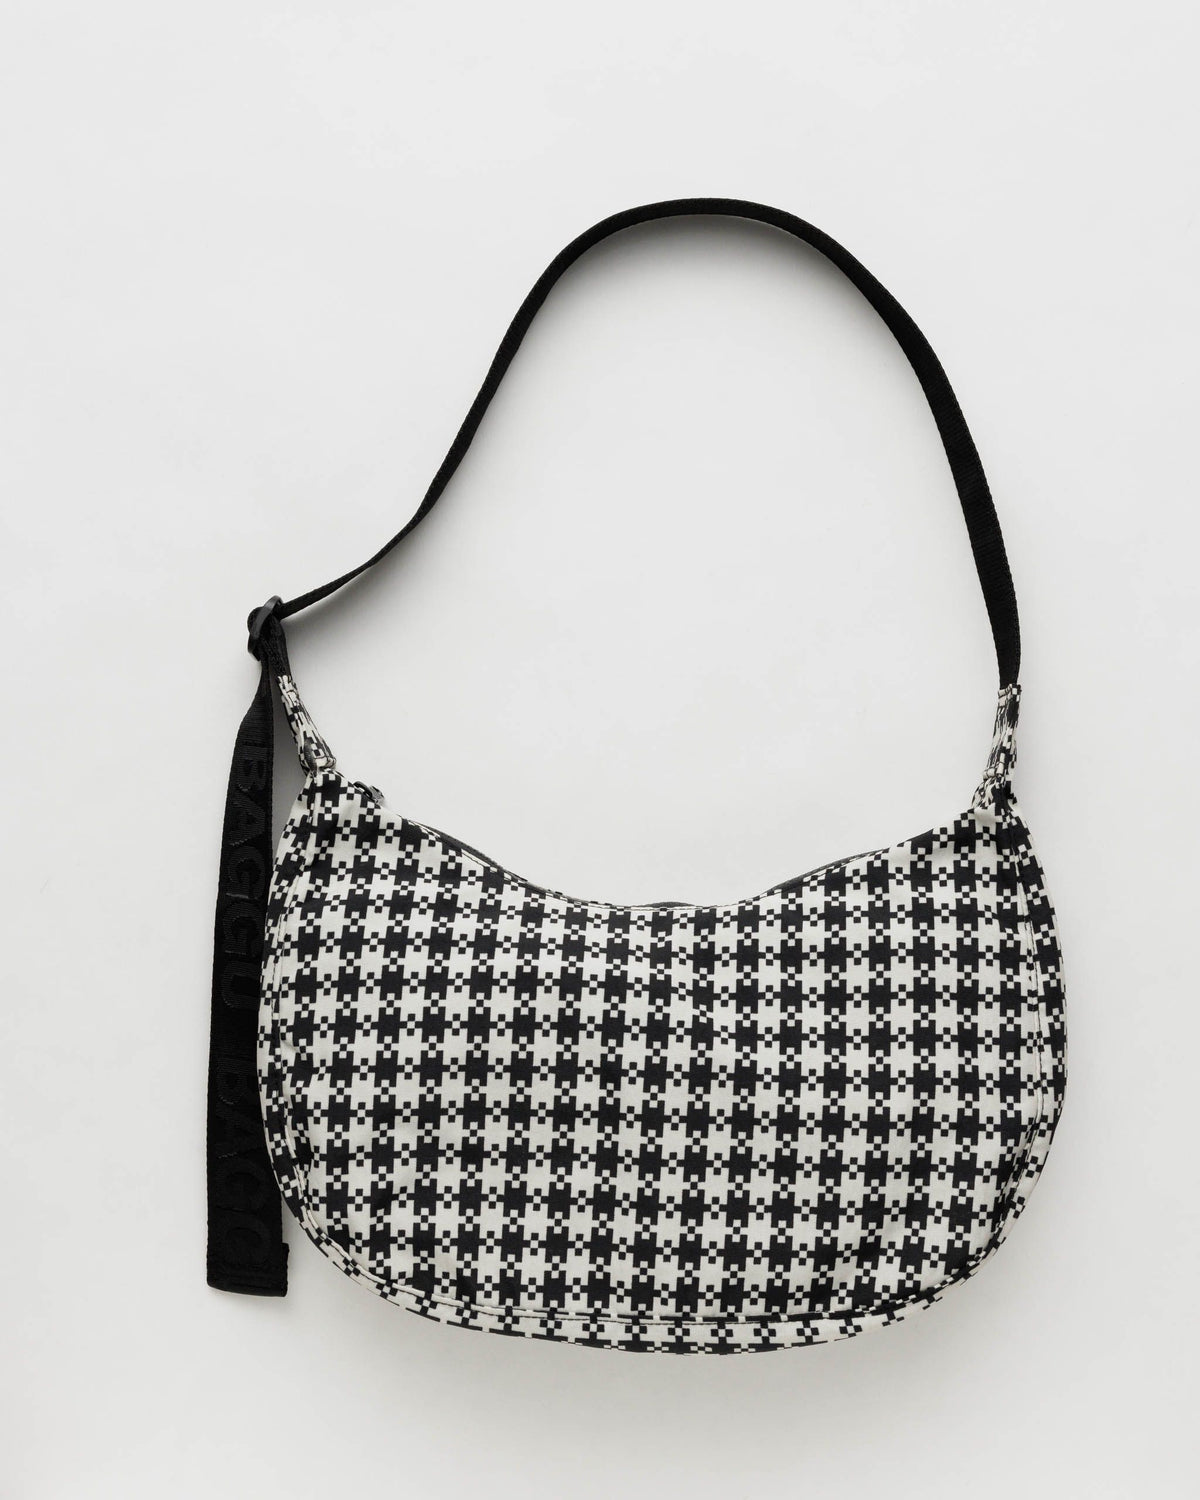 BAGGU - Medium Nylon Crescent Bag -  Black and White Pixel Gingham